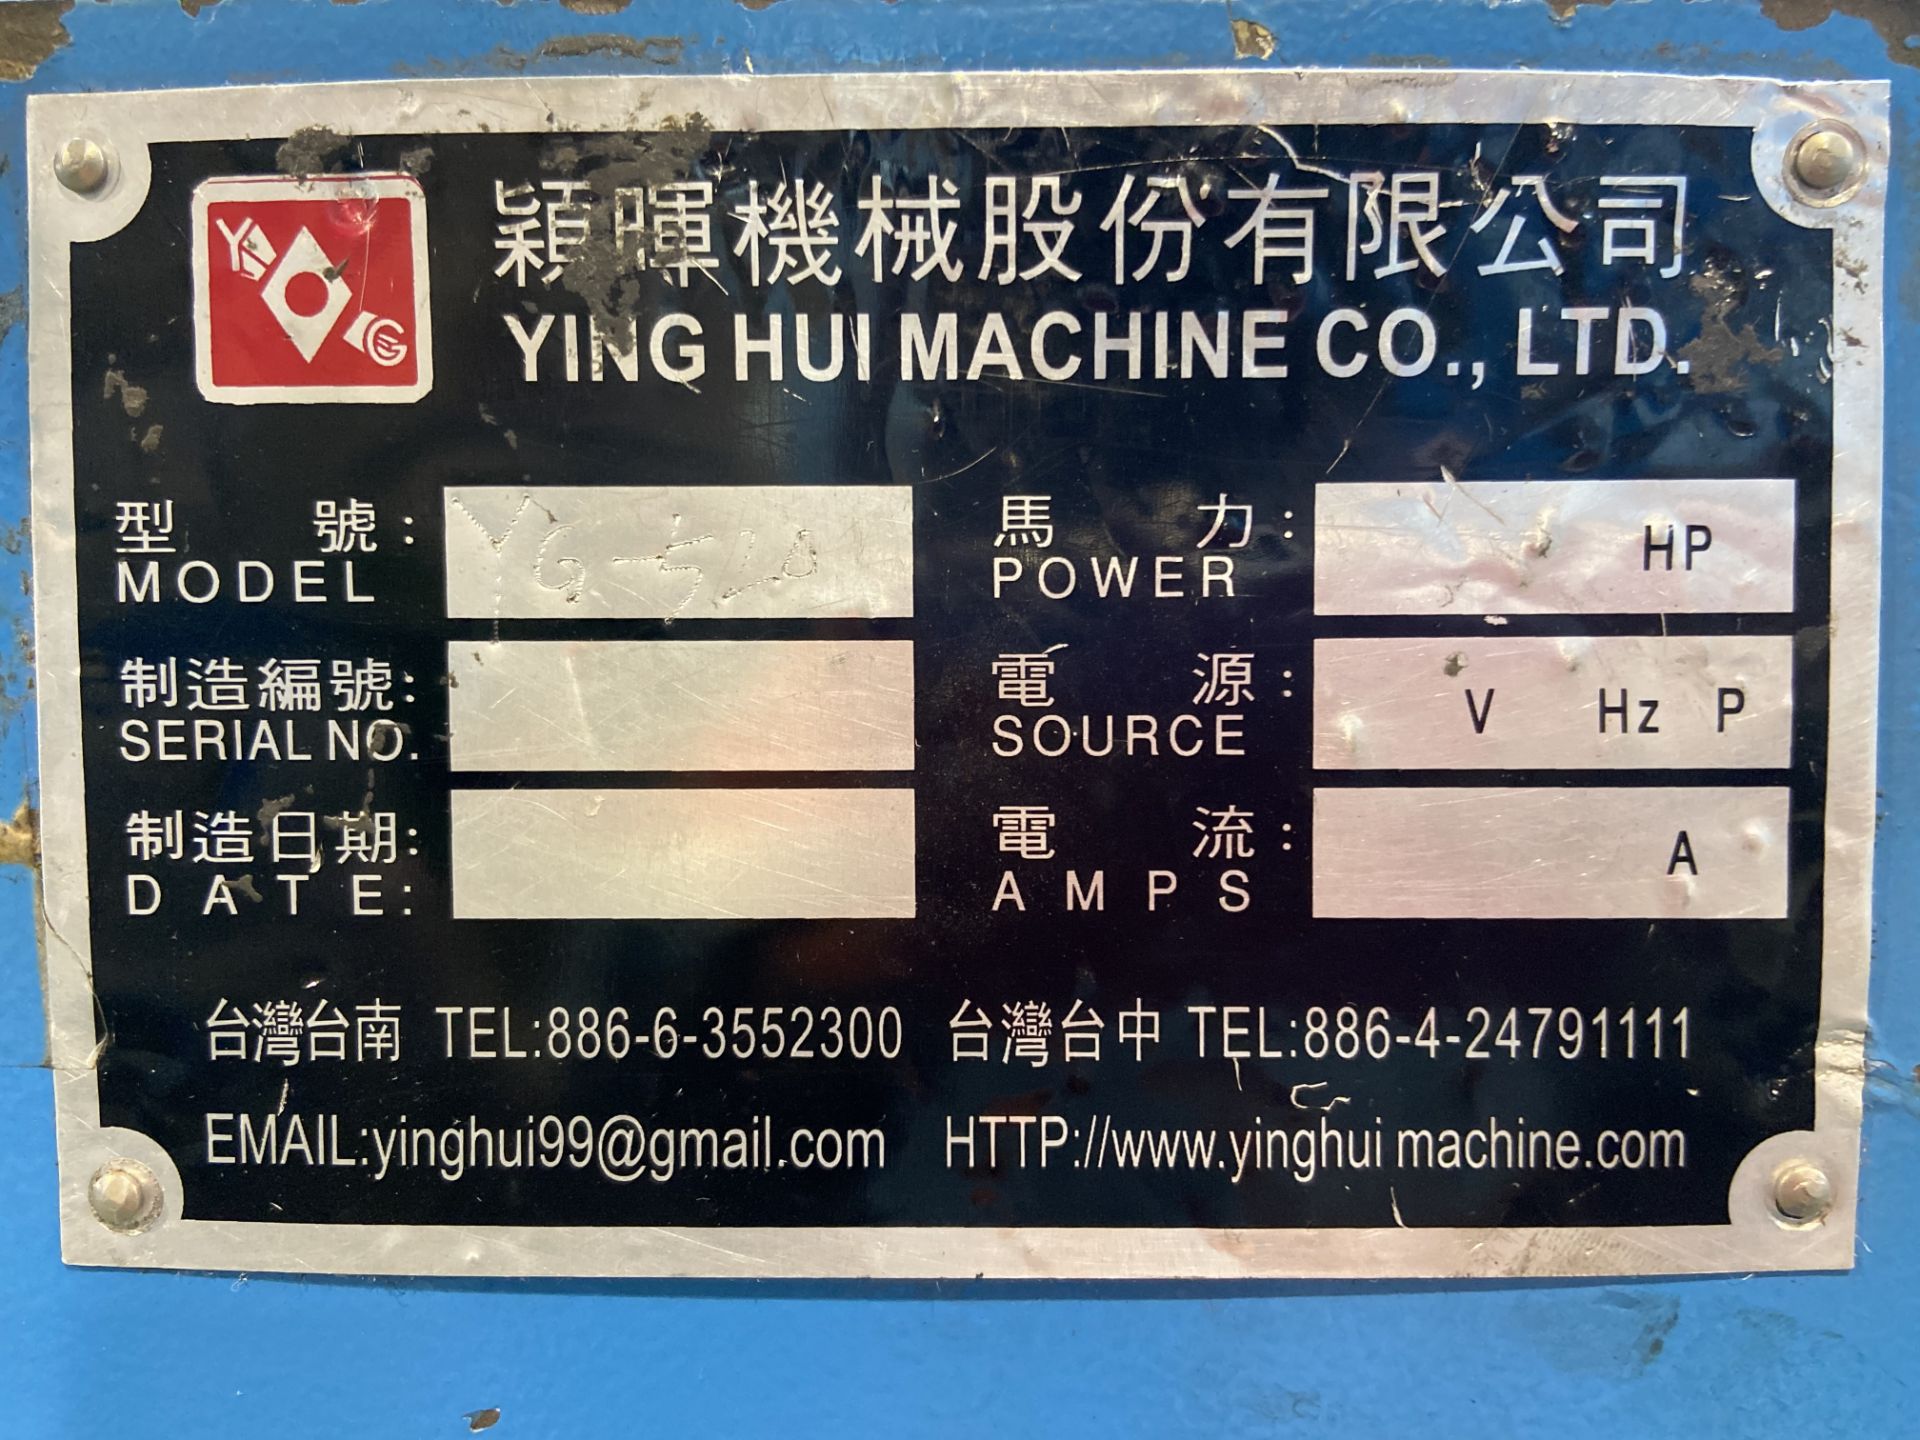 (2) Prensas de corte hidráulica de brazo oscilante, marca Ying Hui Machine, Modelo: YG-520 - Image 8 of 19